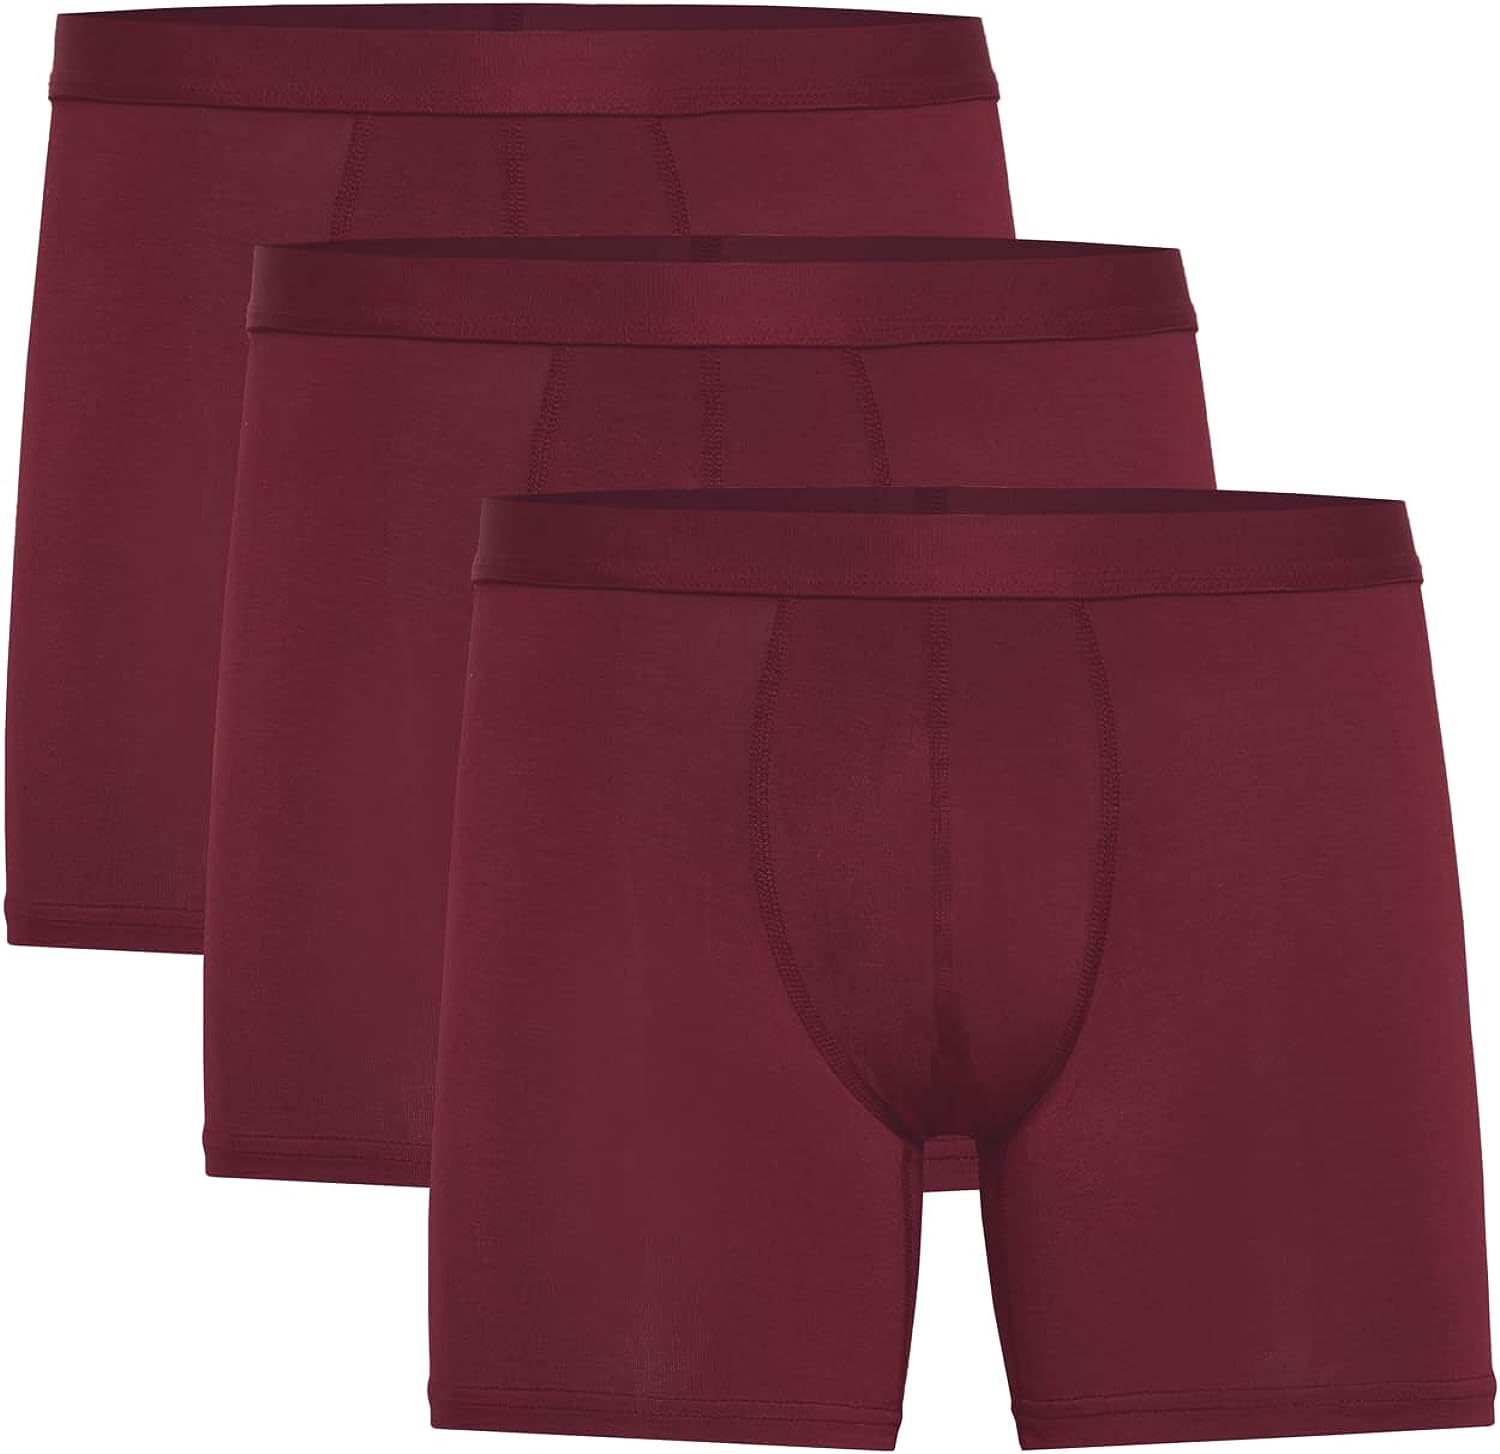 Buy DISPENSER Men's Brief Micro Modal Ultra Soft Underwear Pack of